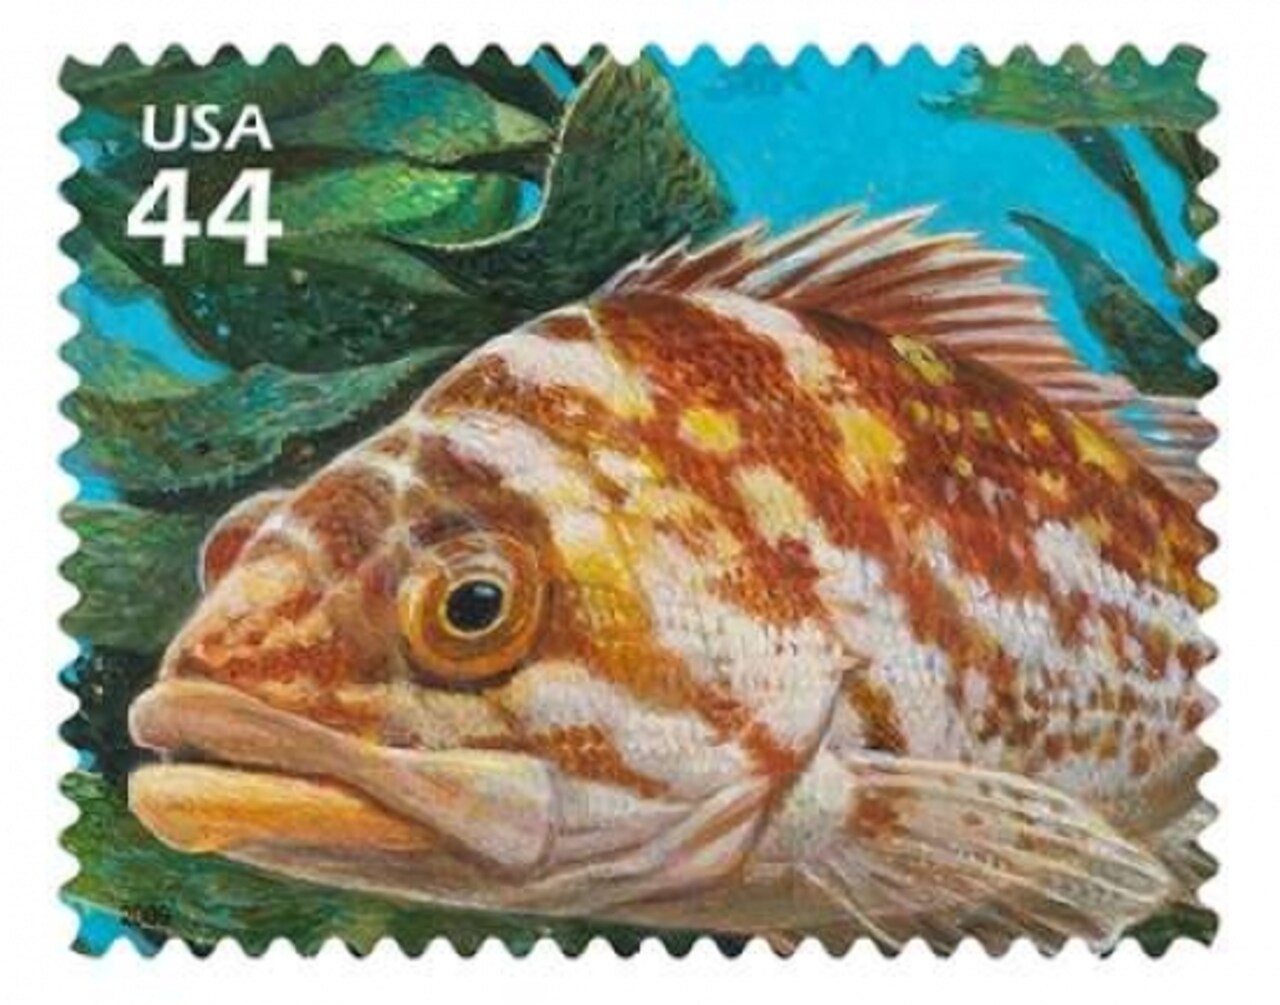 Copper Rockfish Poster Print by  US POSTAL SERVICE - Item # VARPDX3529